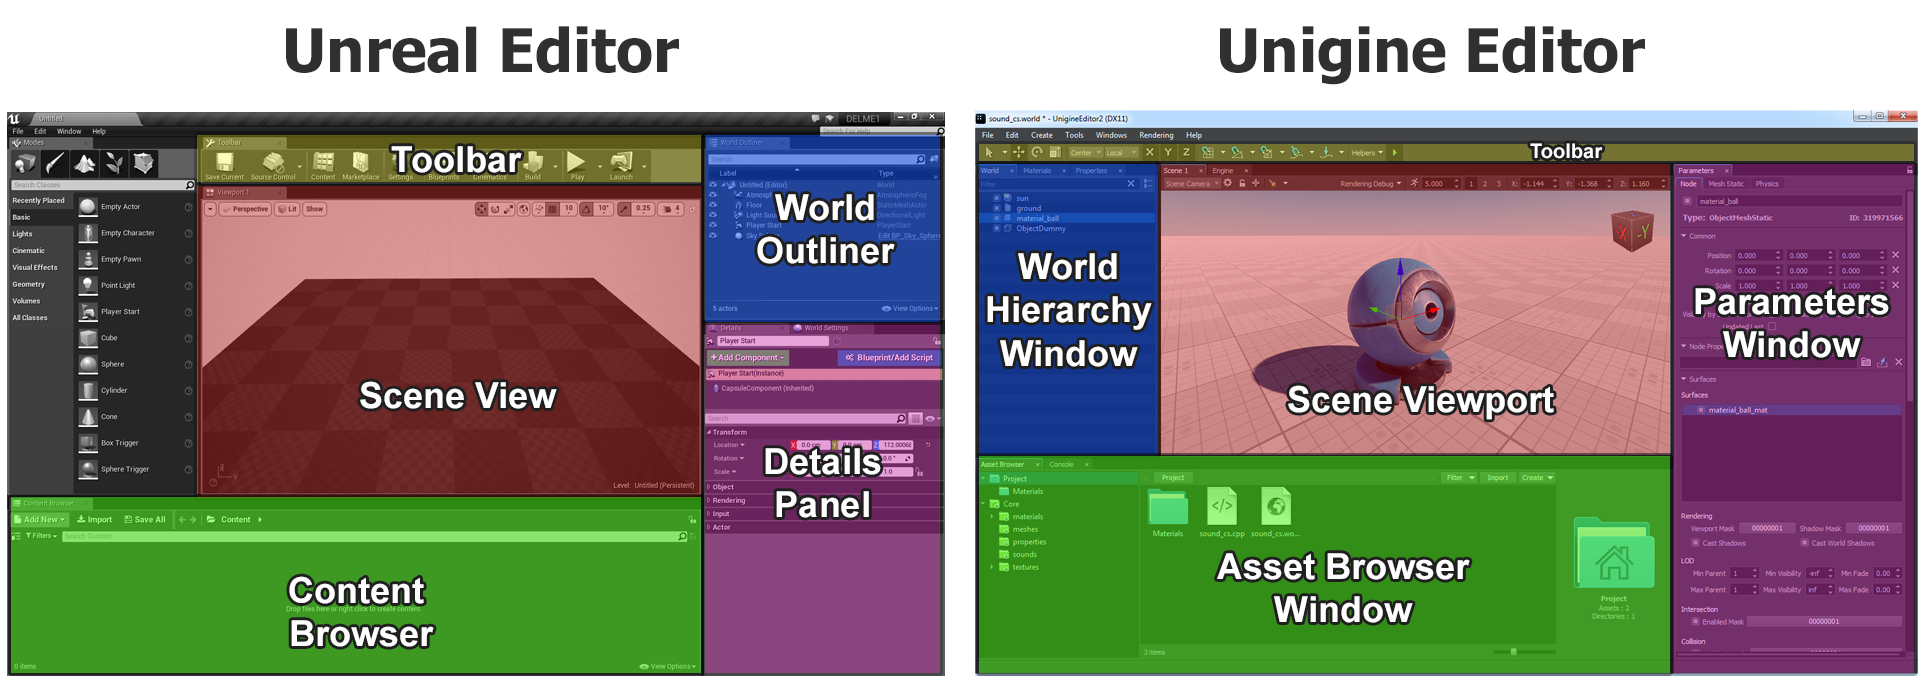 Unreal and Unigine Editor UI Comparison (click to enlarge)